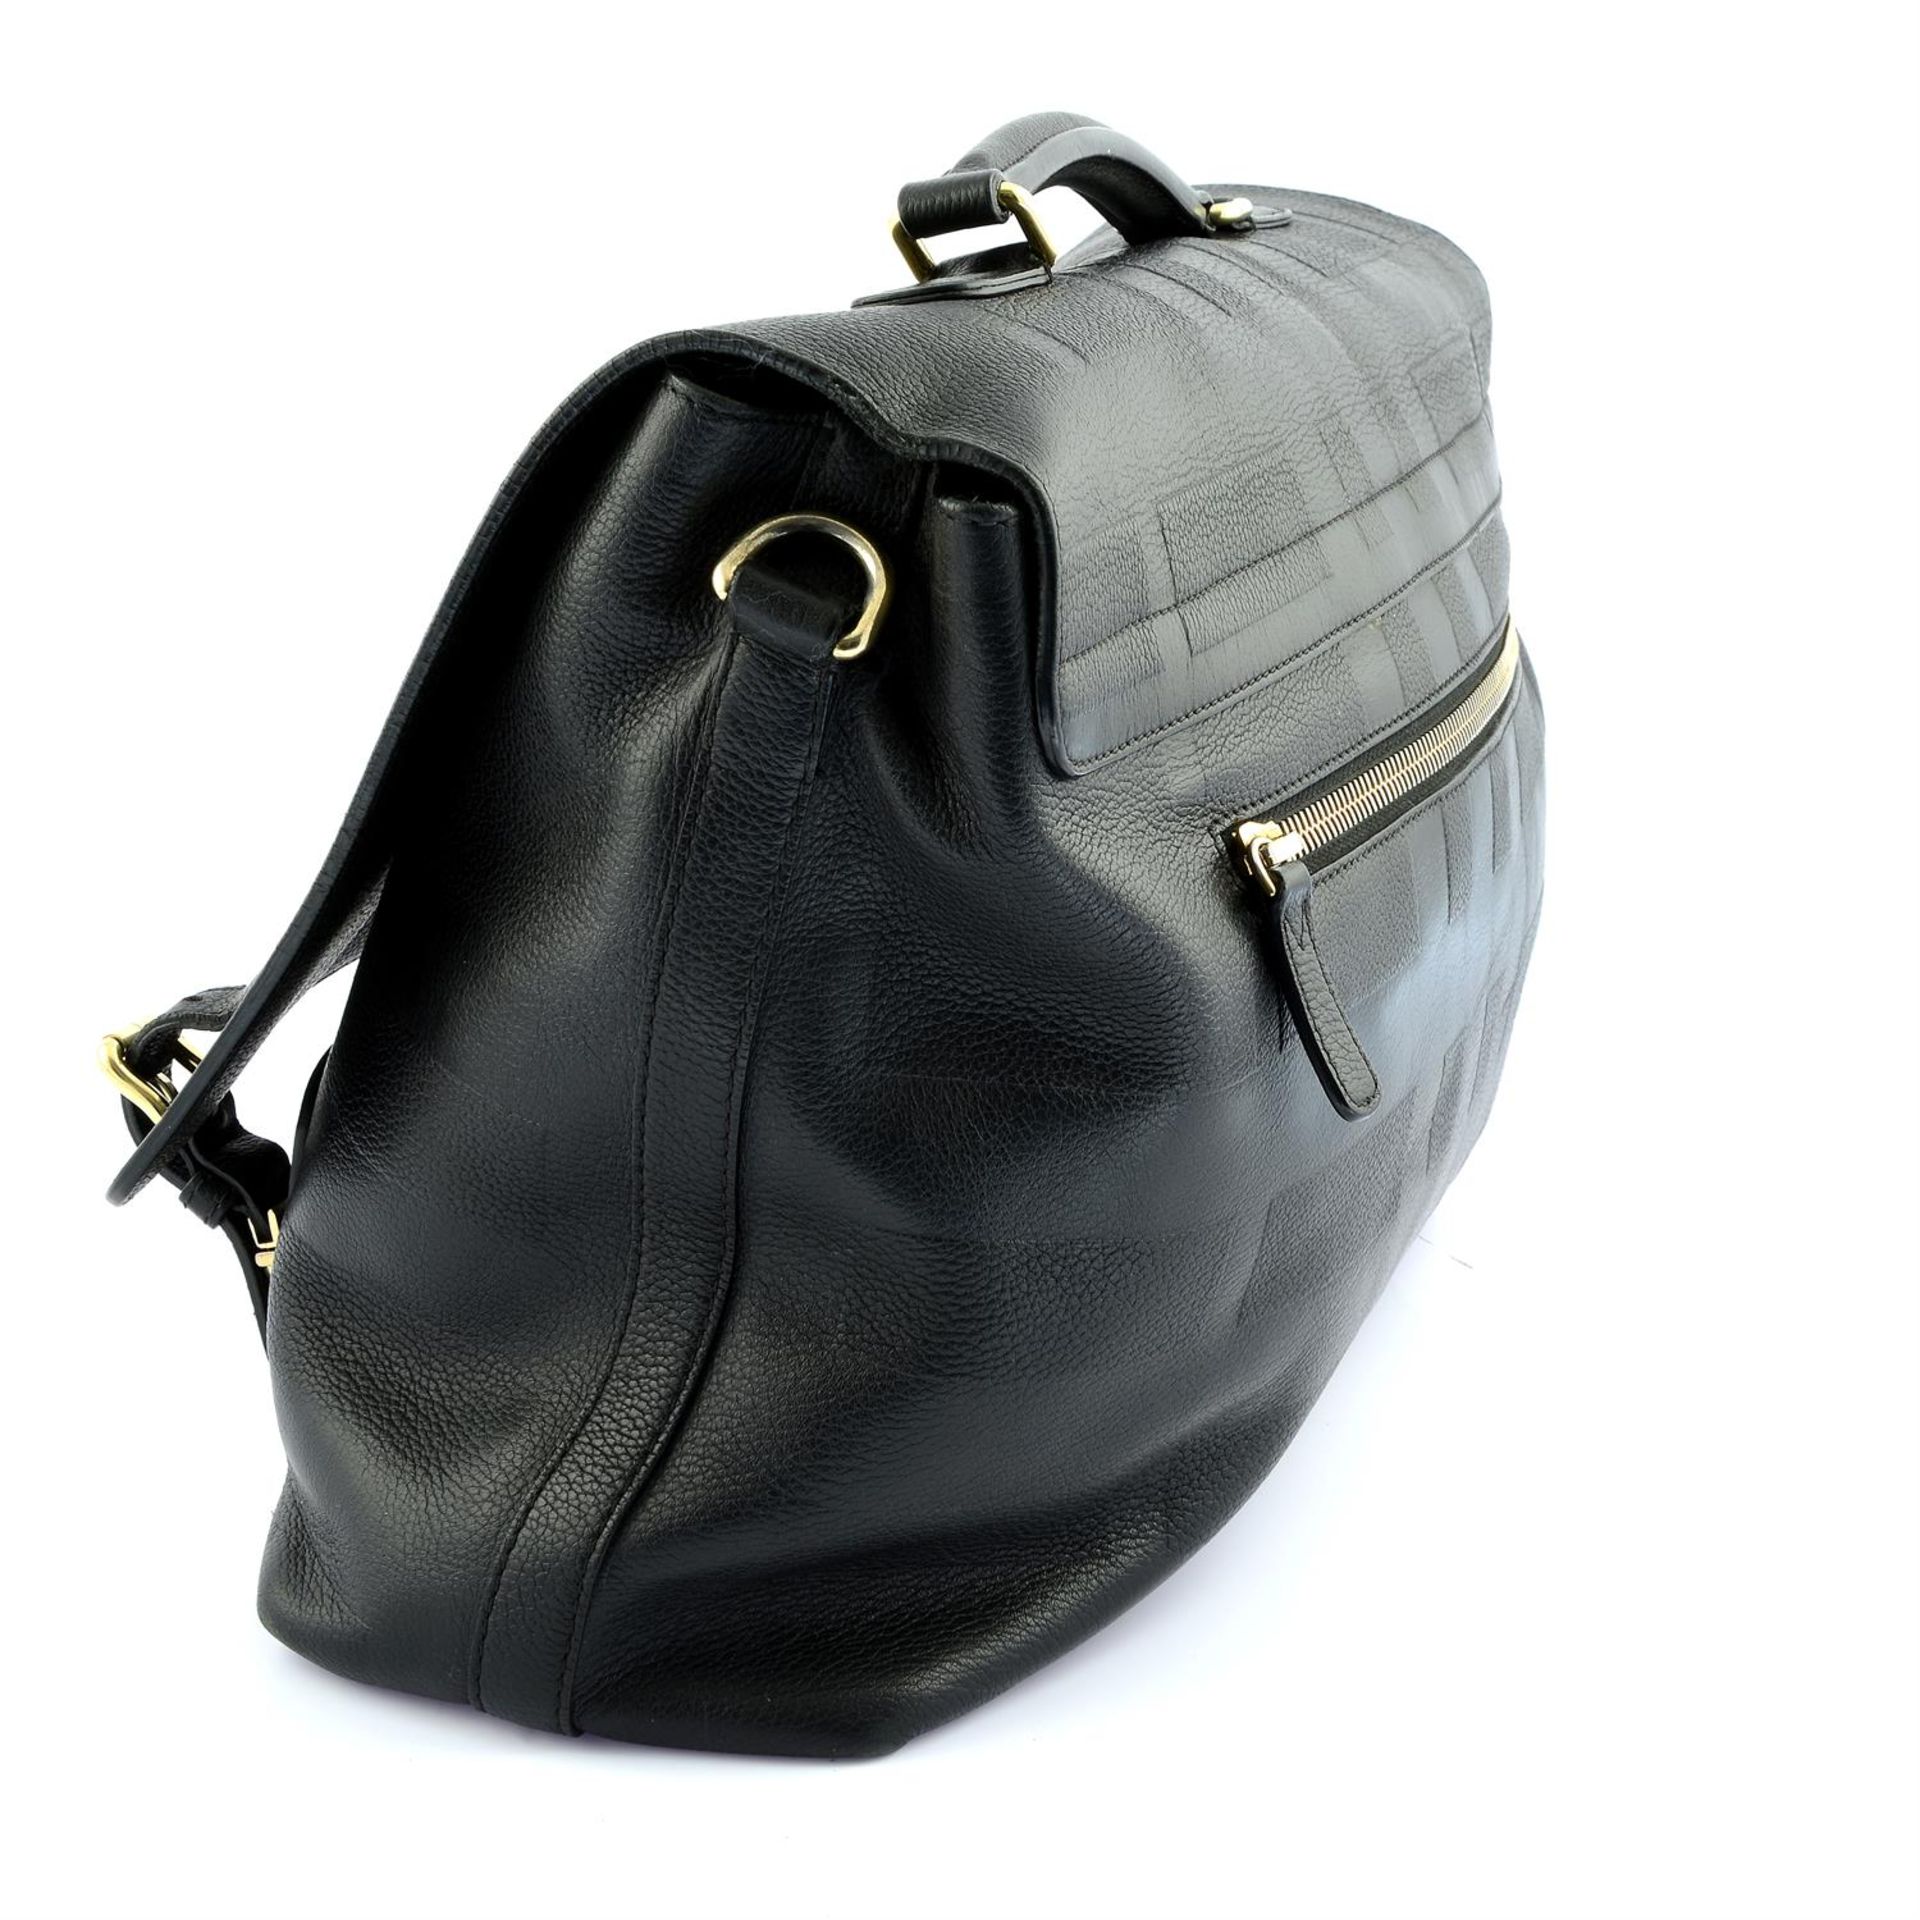 BURBERRY - a black embossed leather satchel. - Bild 3 aus 4